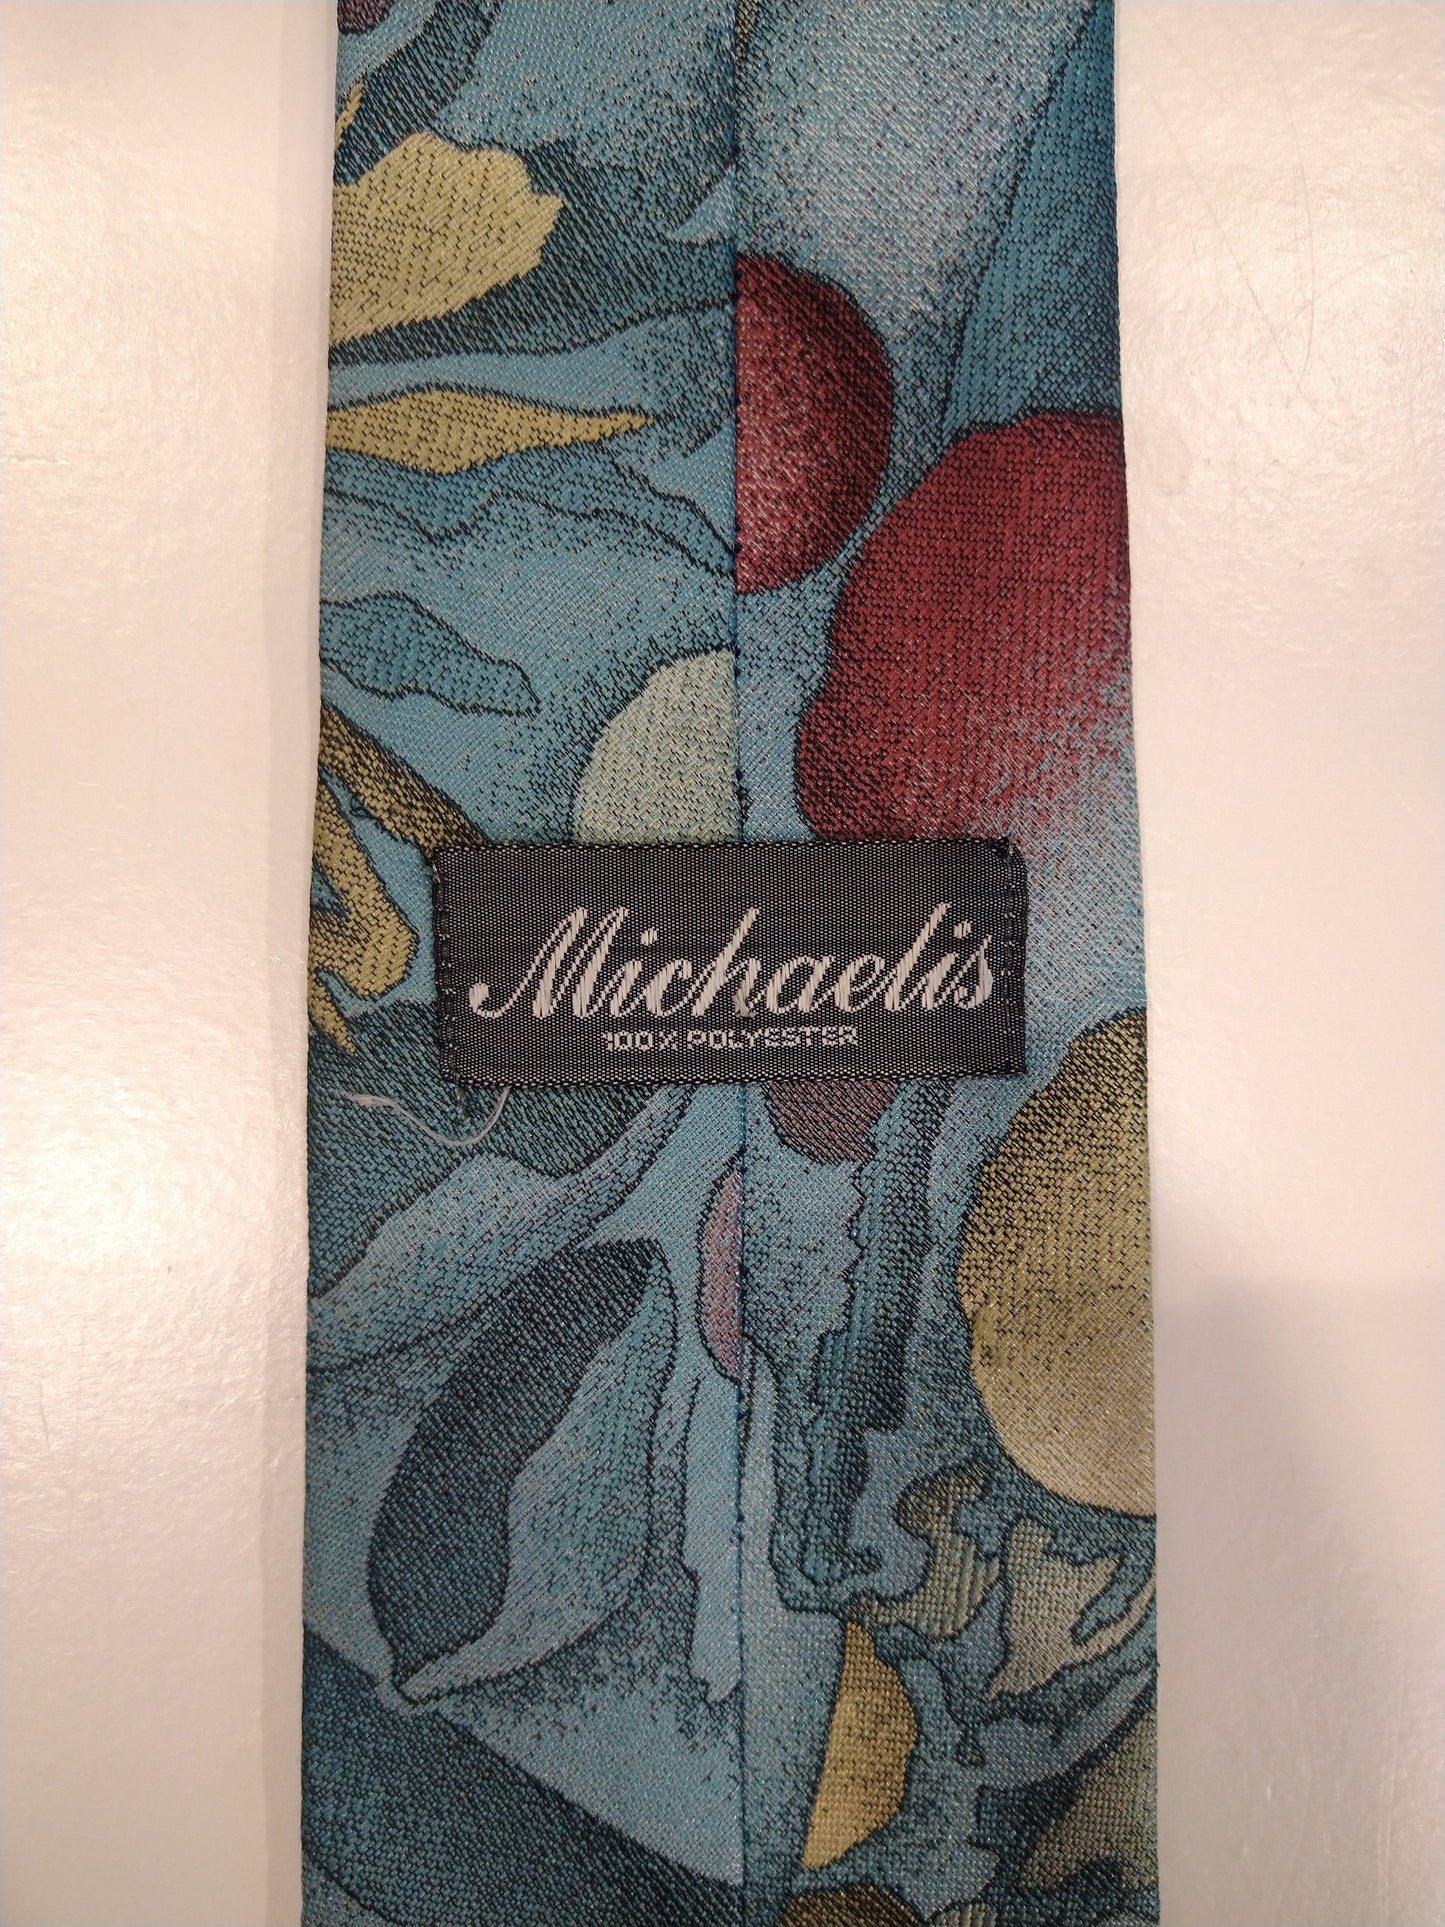 Vintage Michaelis polyester stropdas. Mooi vintage motief.